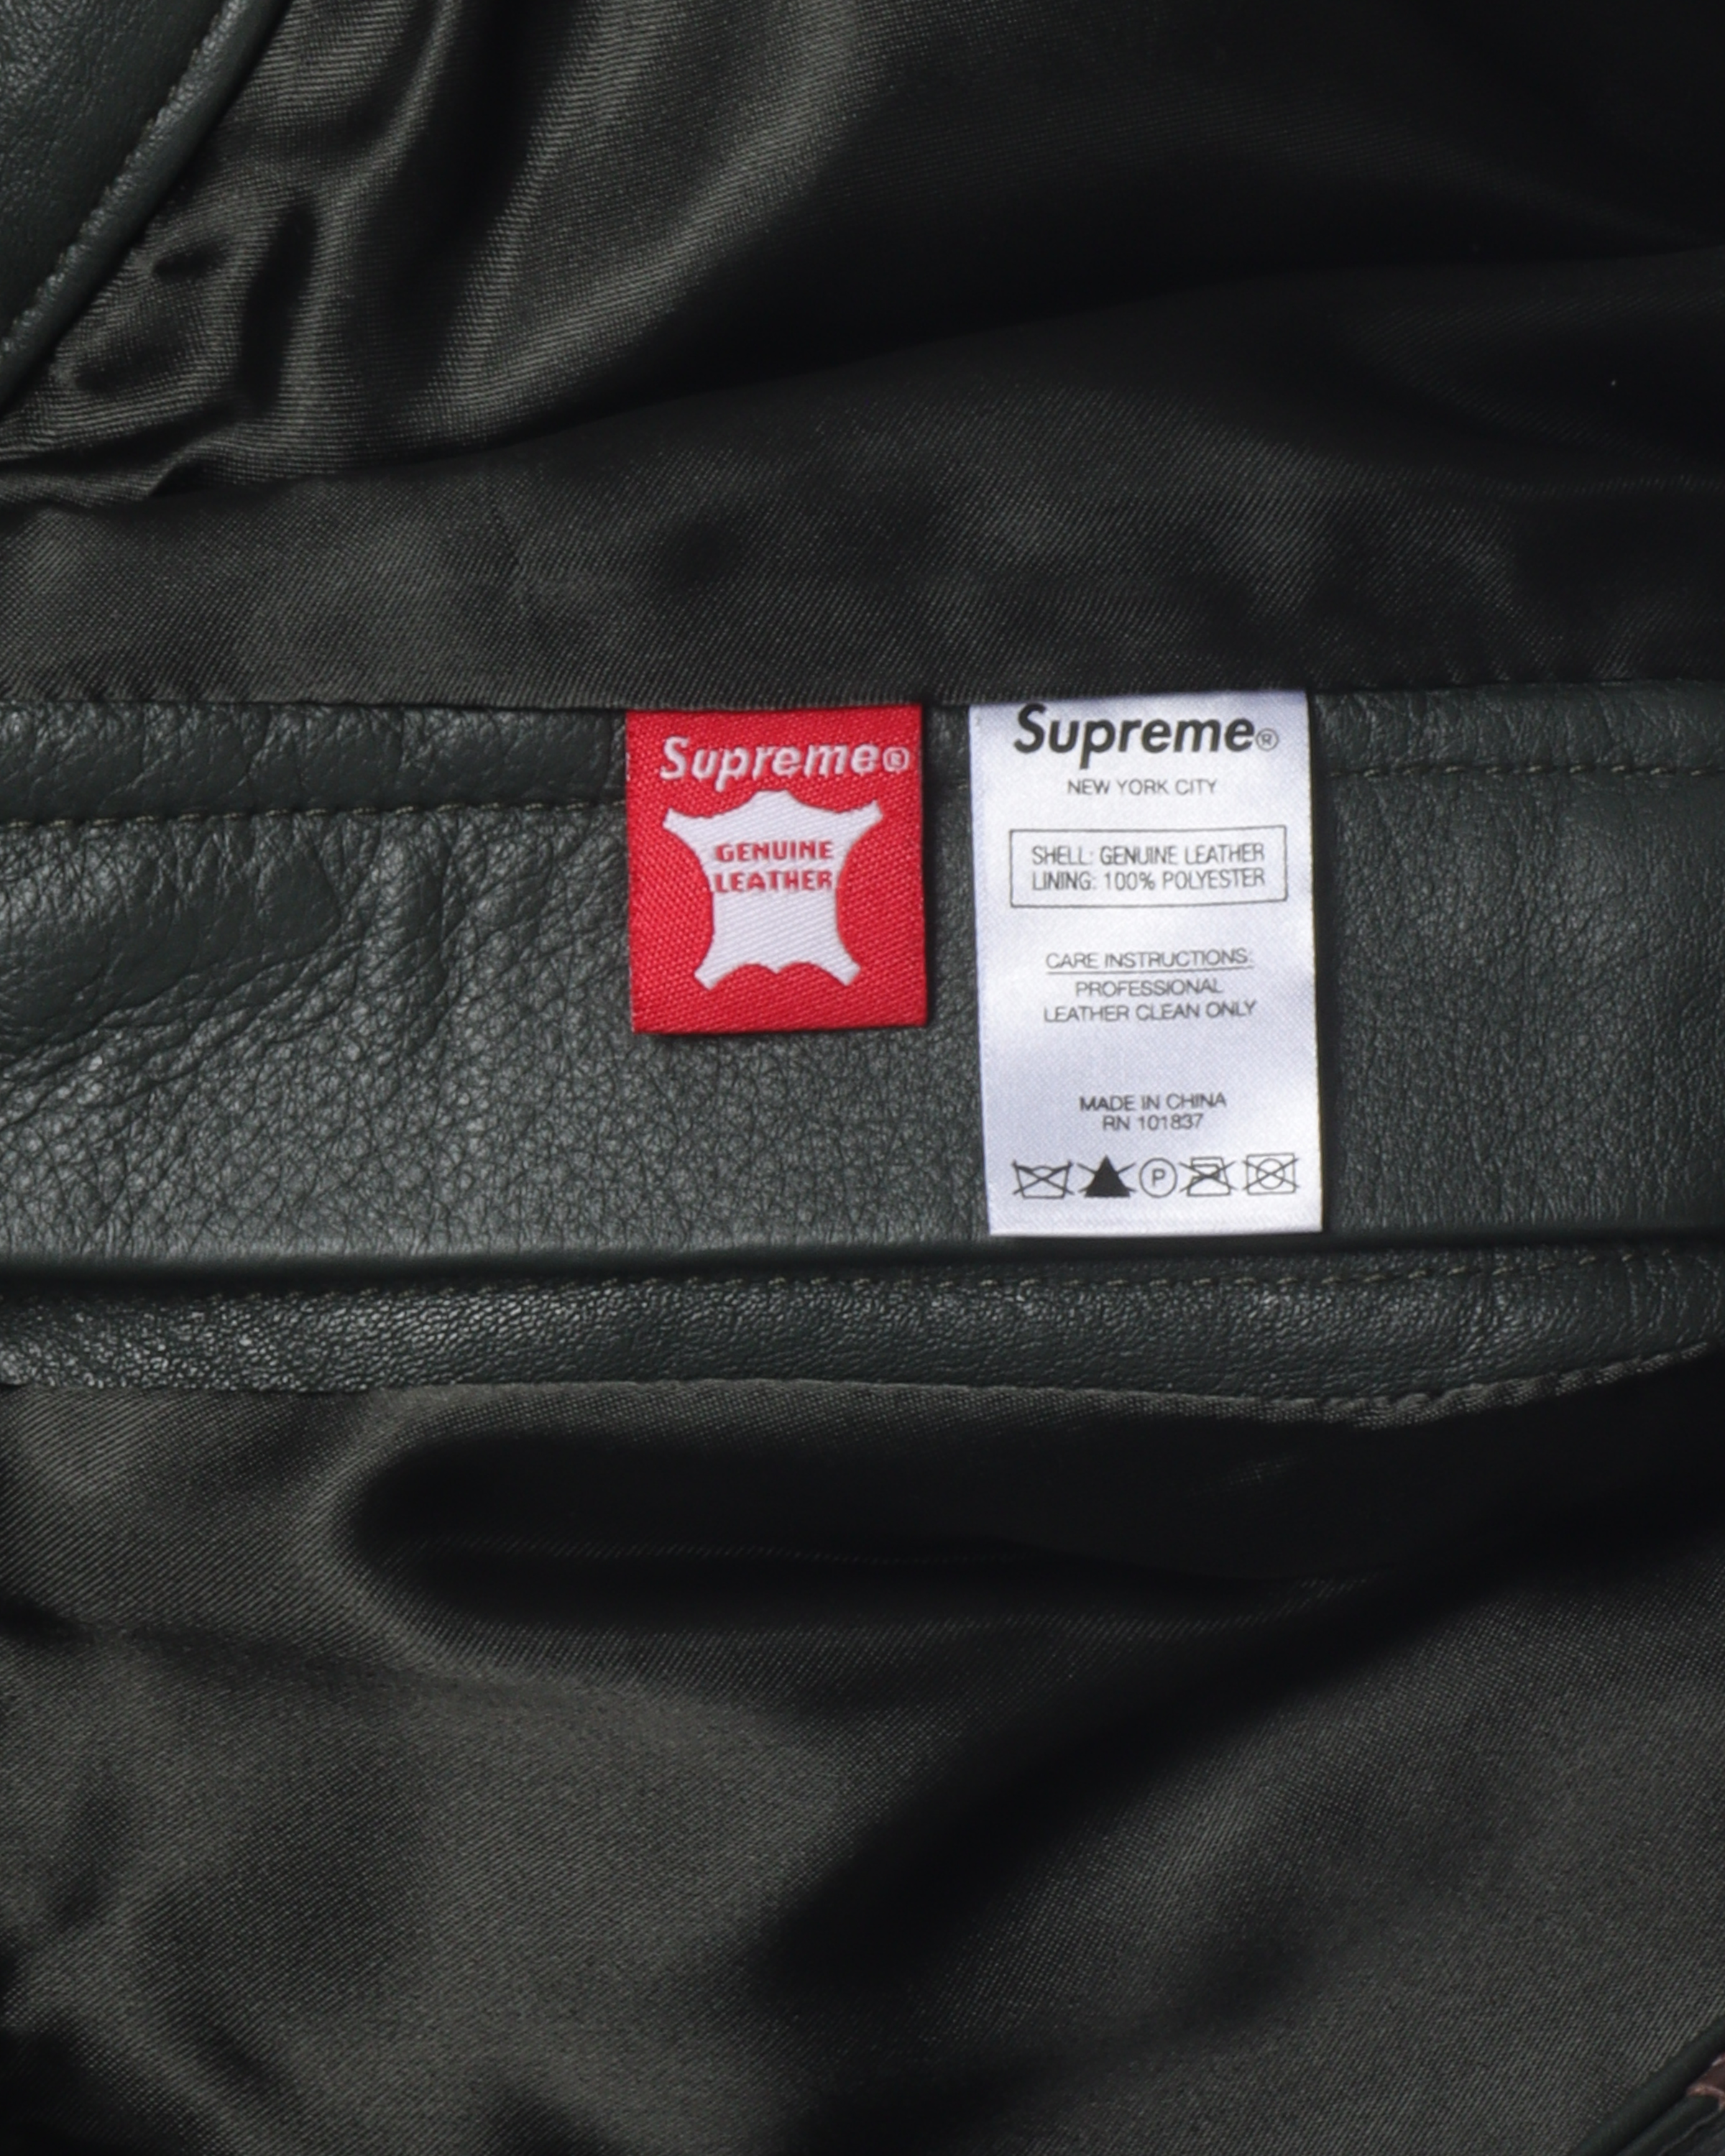 Supreme Camo Leather 5-Pocket Pant Red Camo